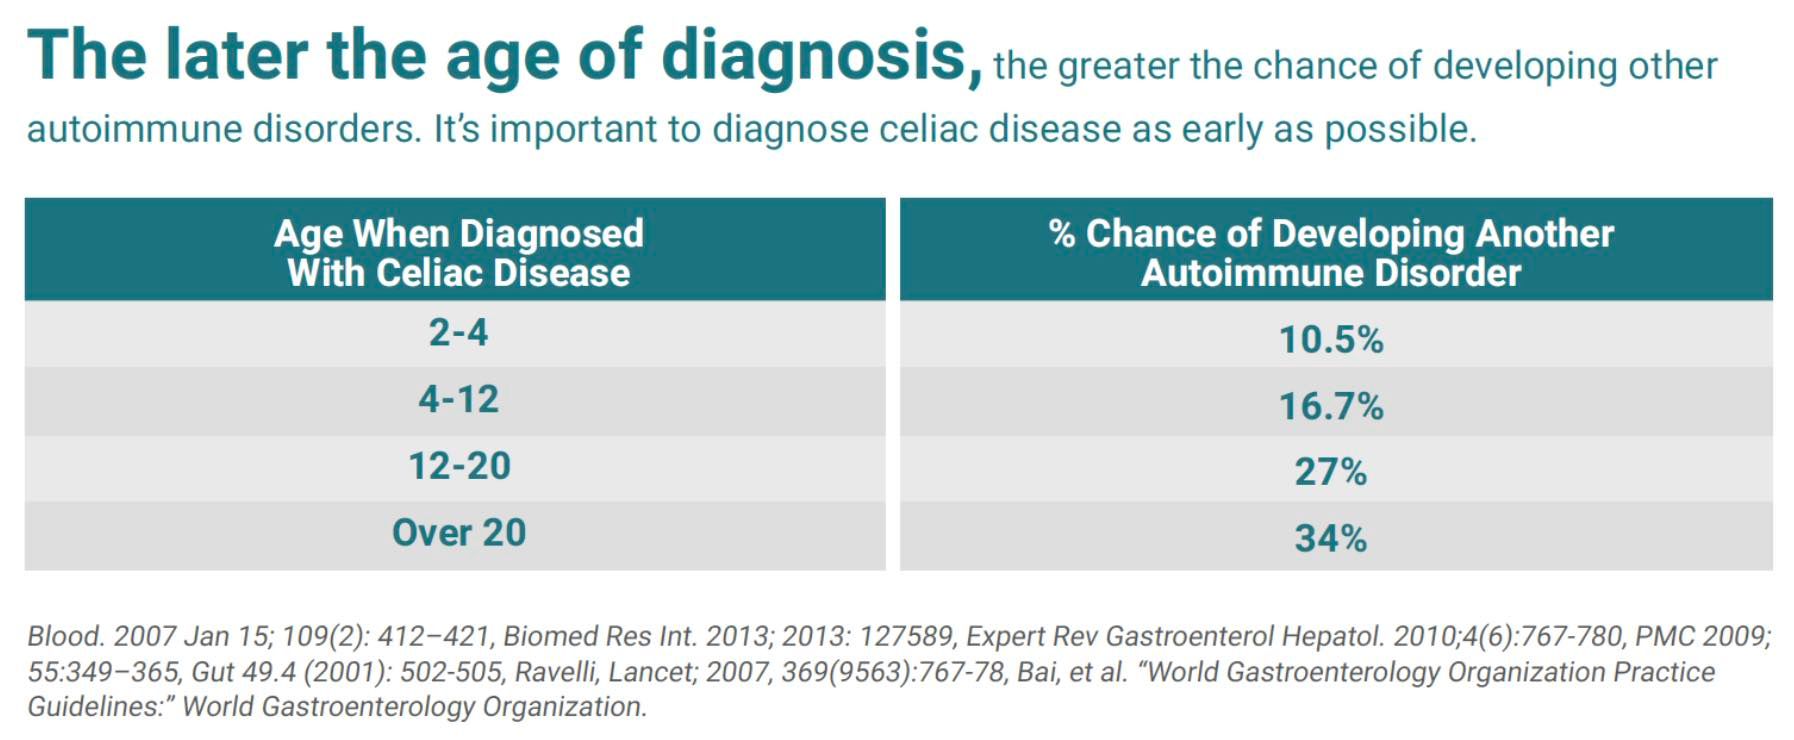 celiac disease diagnosed later increases risk of autoimmune disorders.jpg